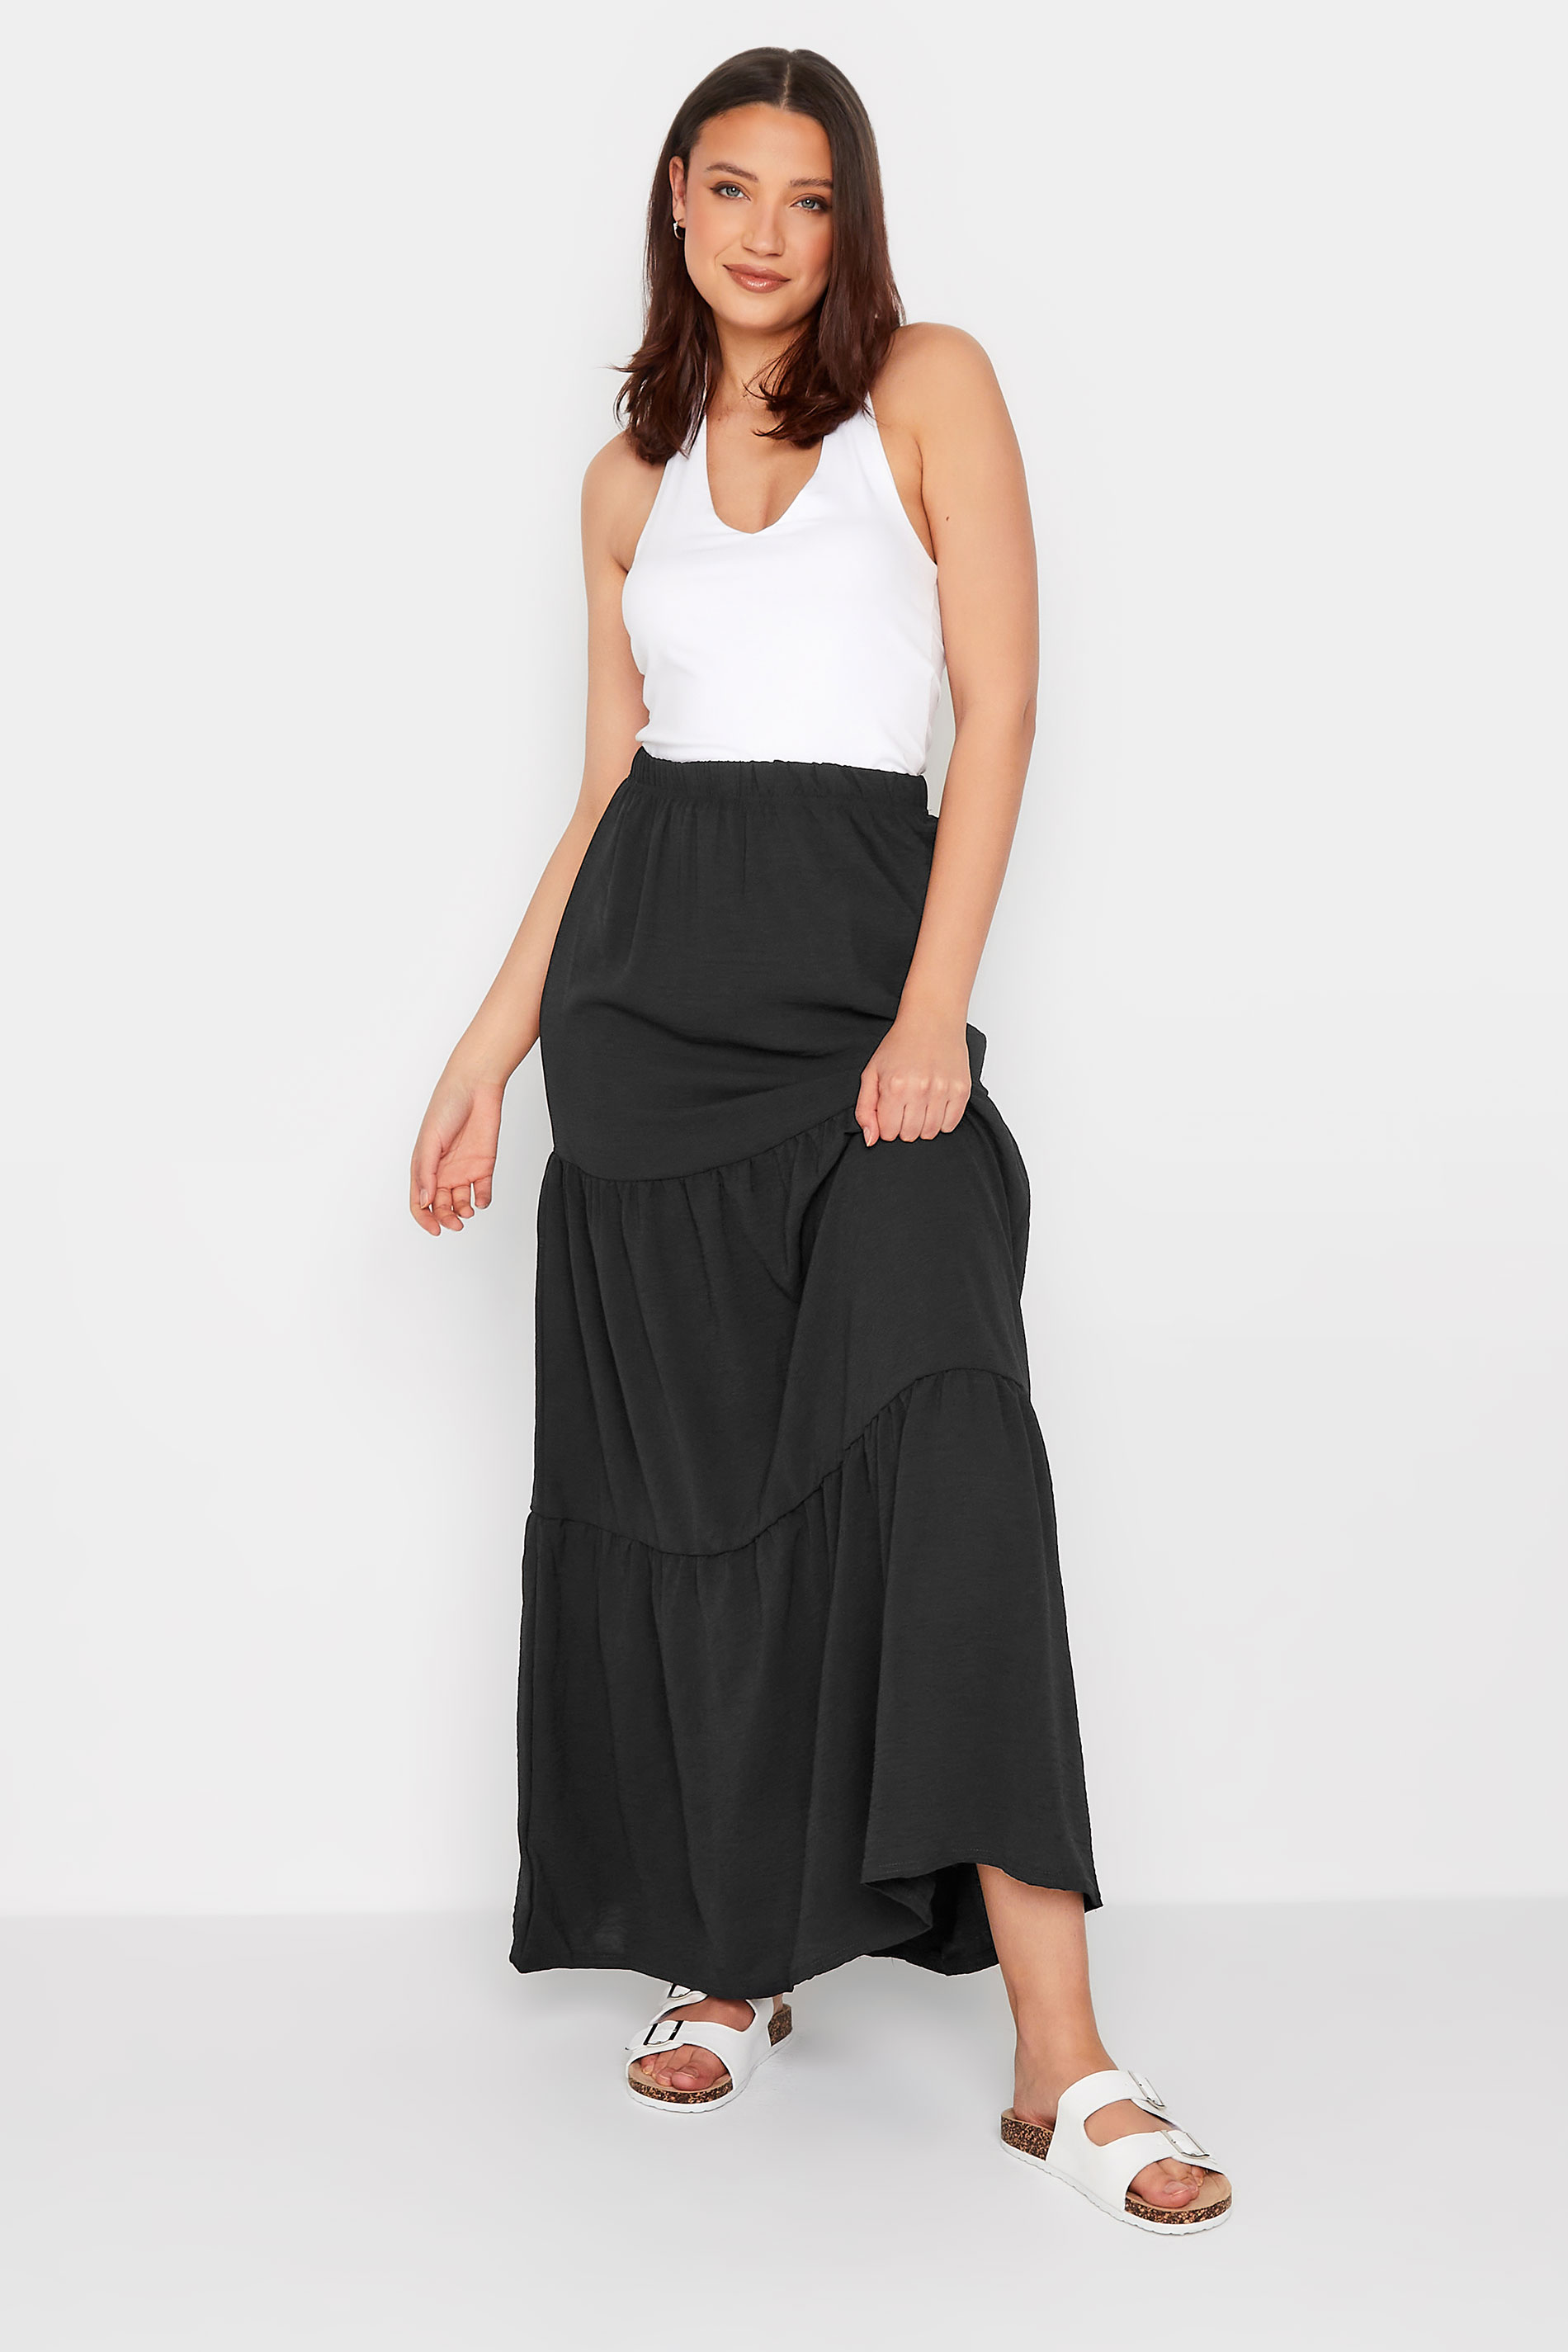 LTS Tall Women's Black Tiered Crepe Maxi Skirt | Long Tall Sally 2